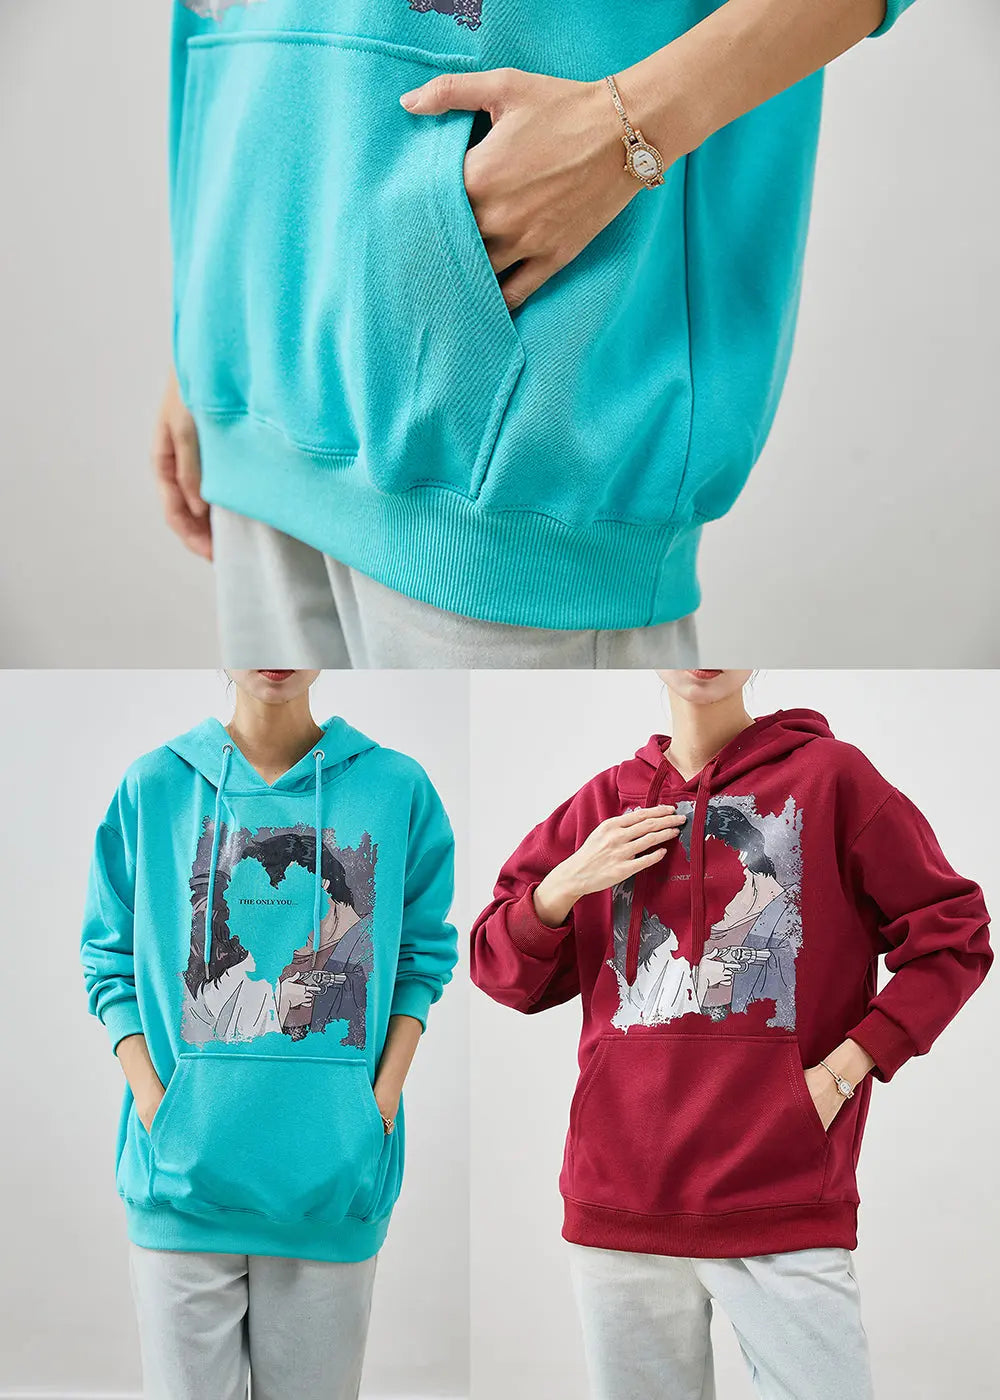 Mulberry Print Cotton Sweatshirt Hooded Pockets Fall Ada Fashion